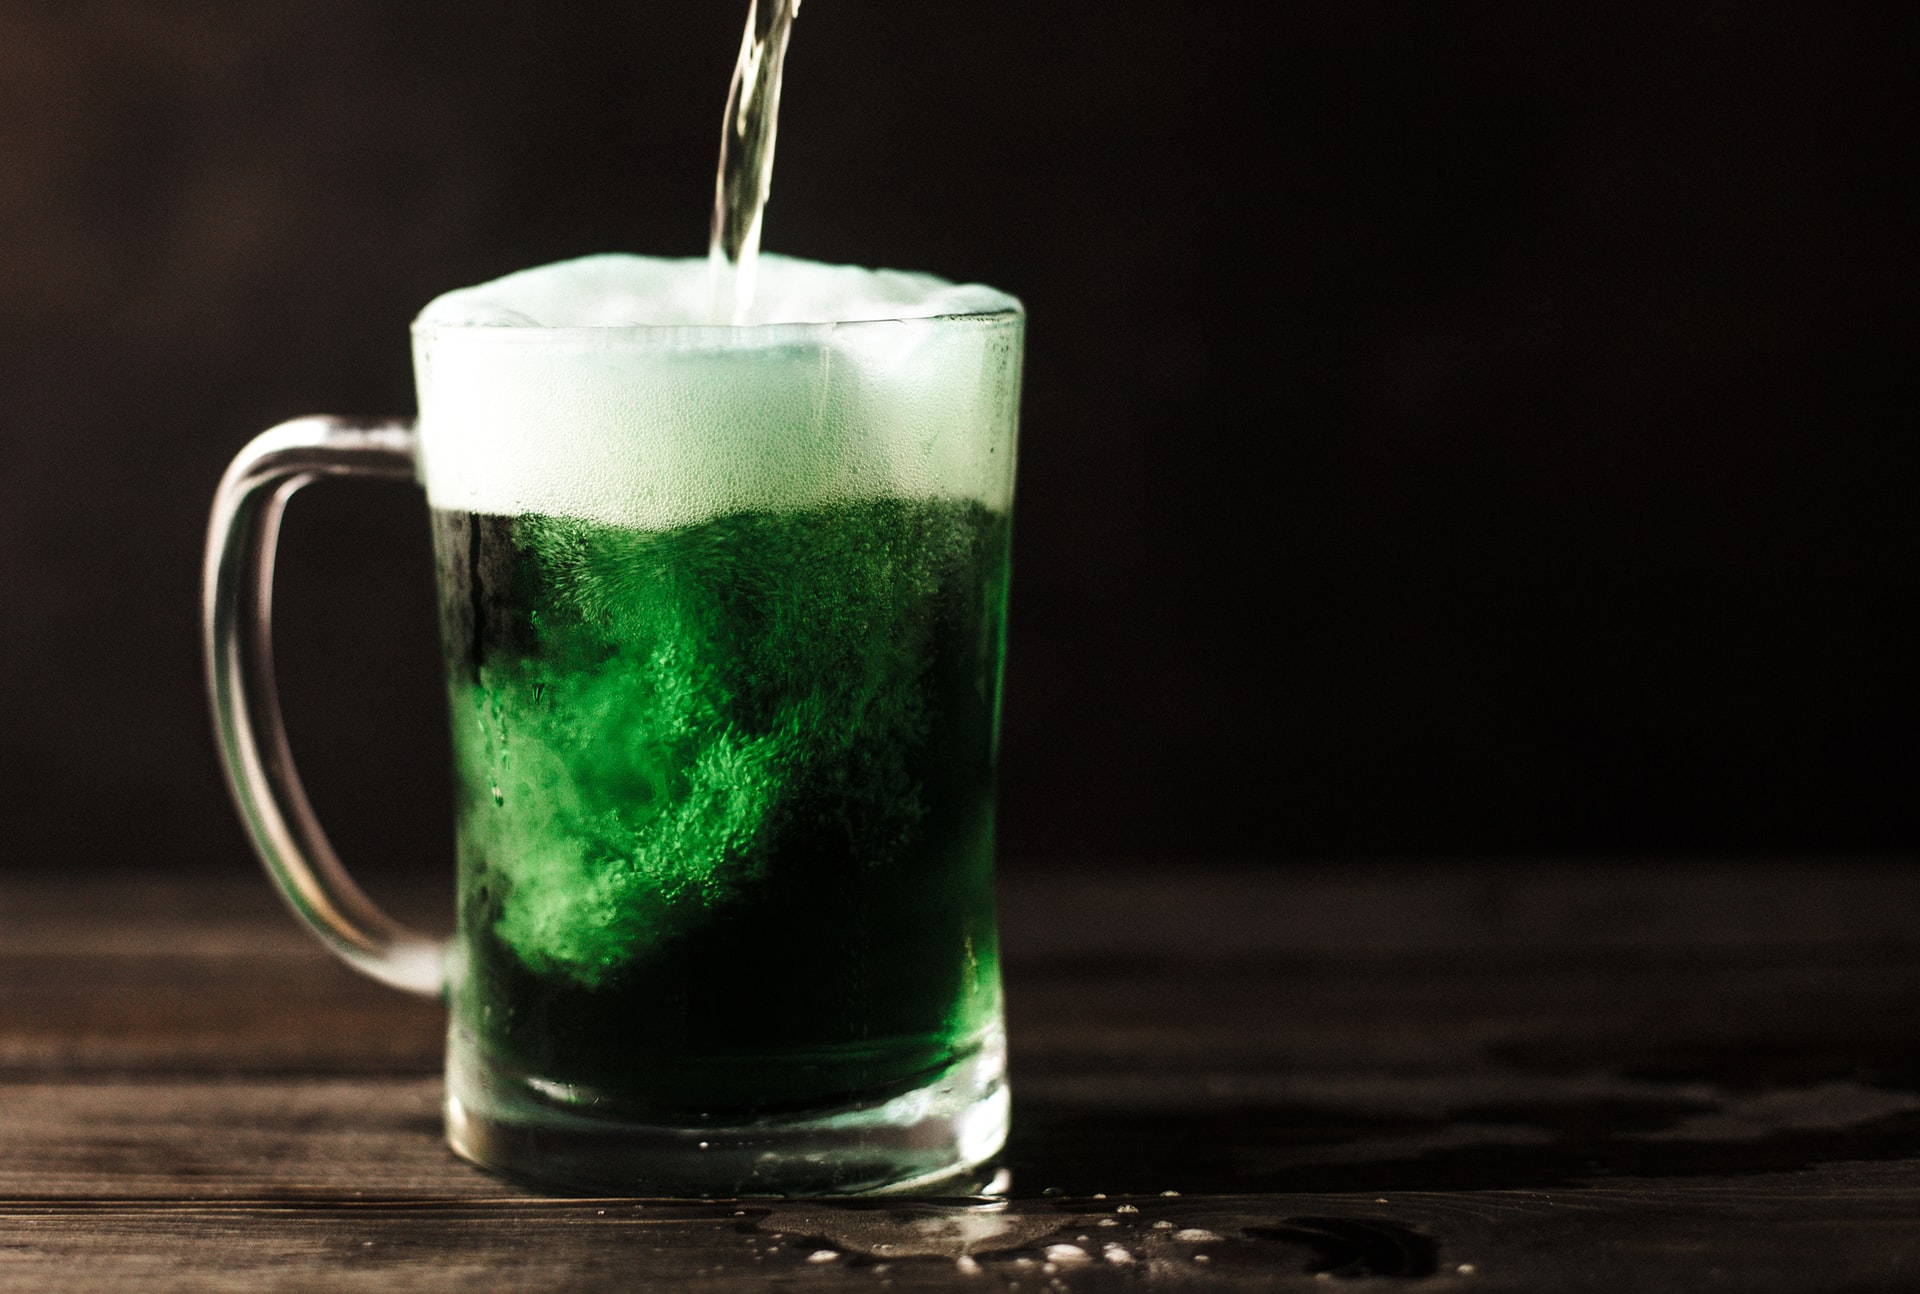 Celebrate St. Patrick’s Day at The Kent House Irish Pub